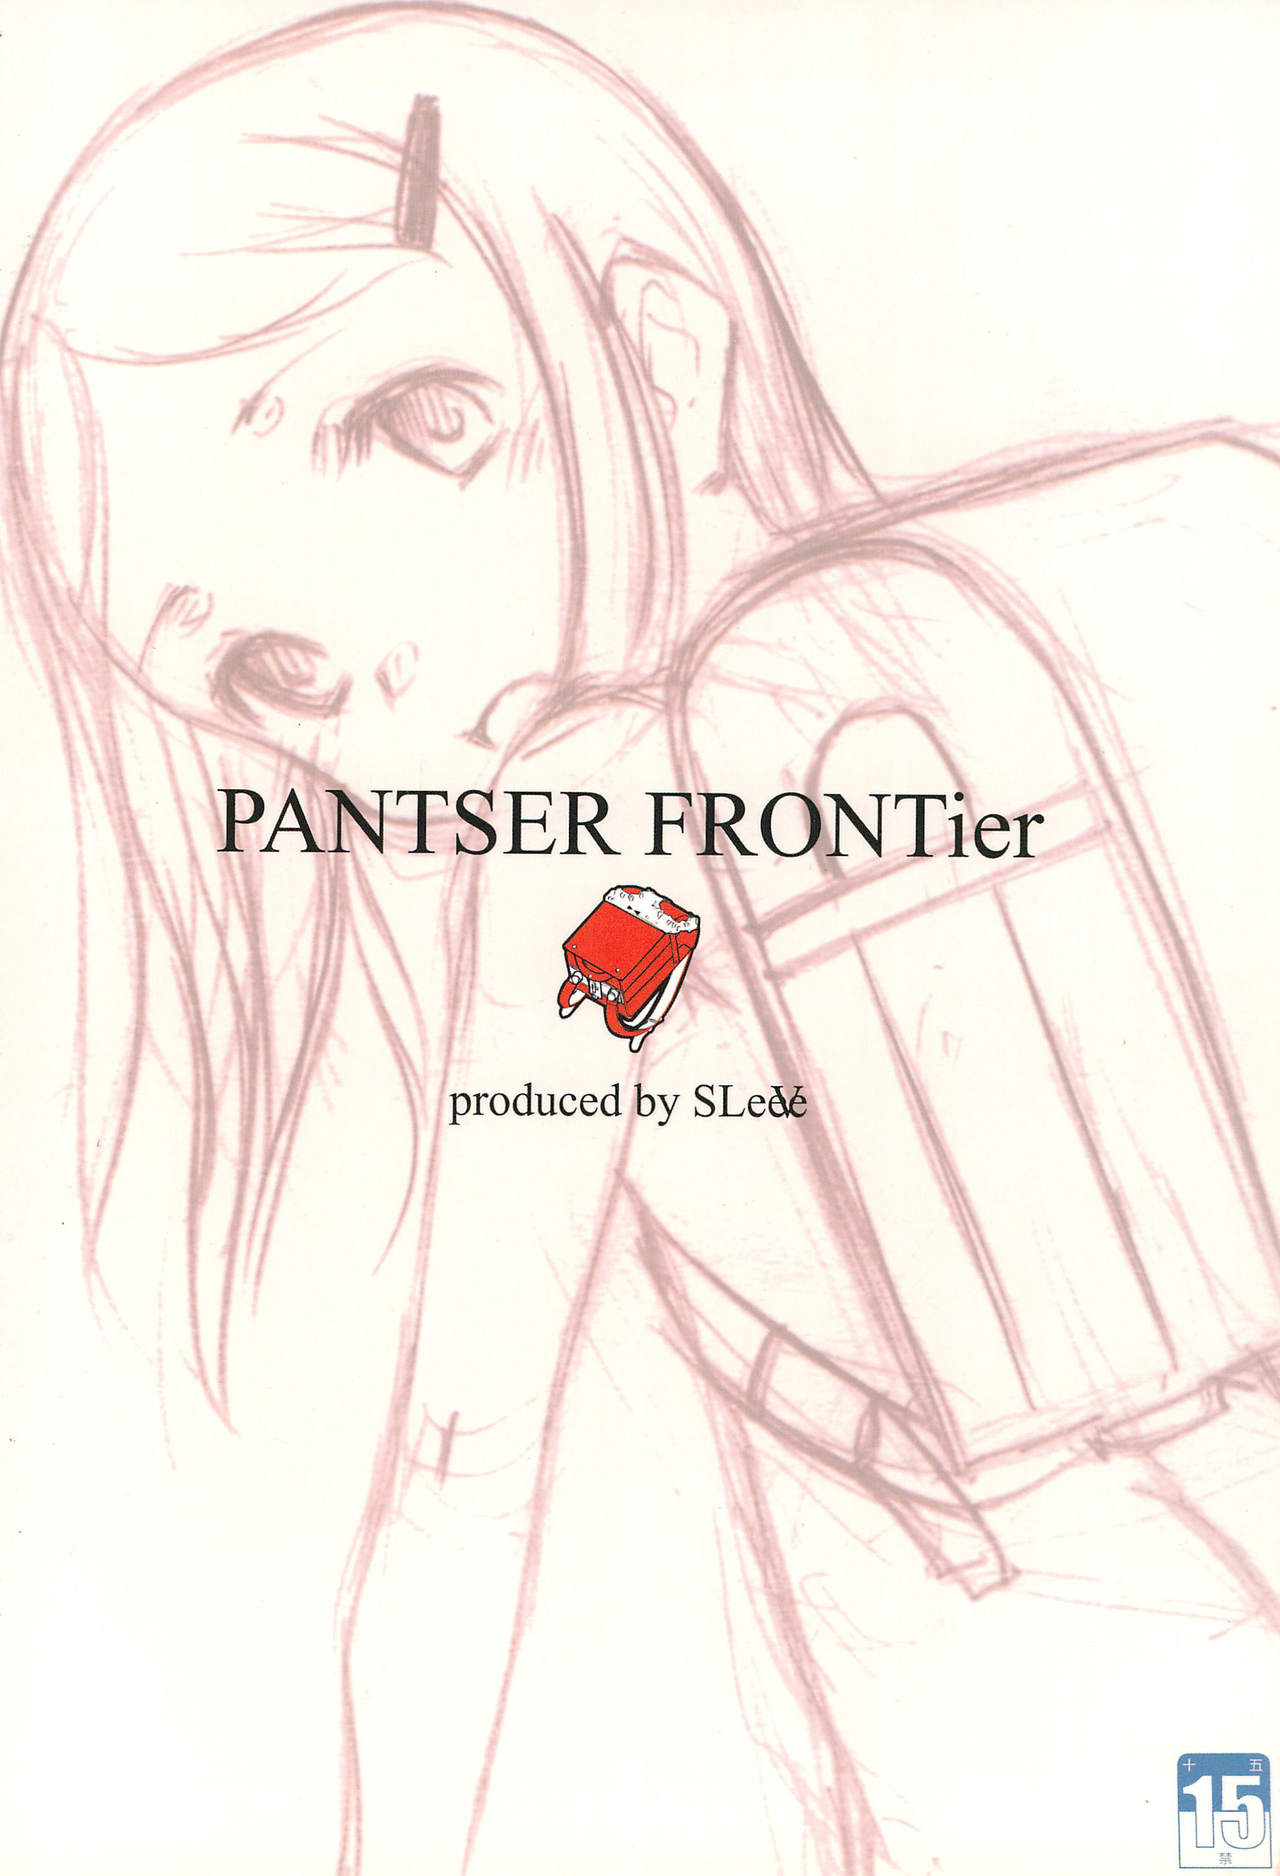 (C69) [SLeeVe (Sody)] PANTSER FRONTier